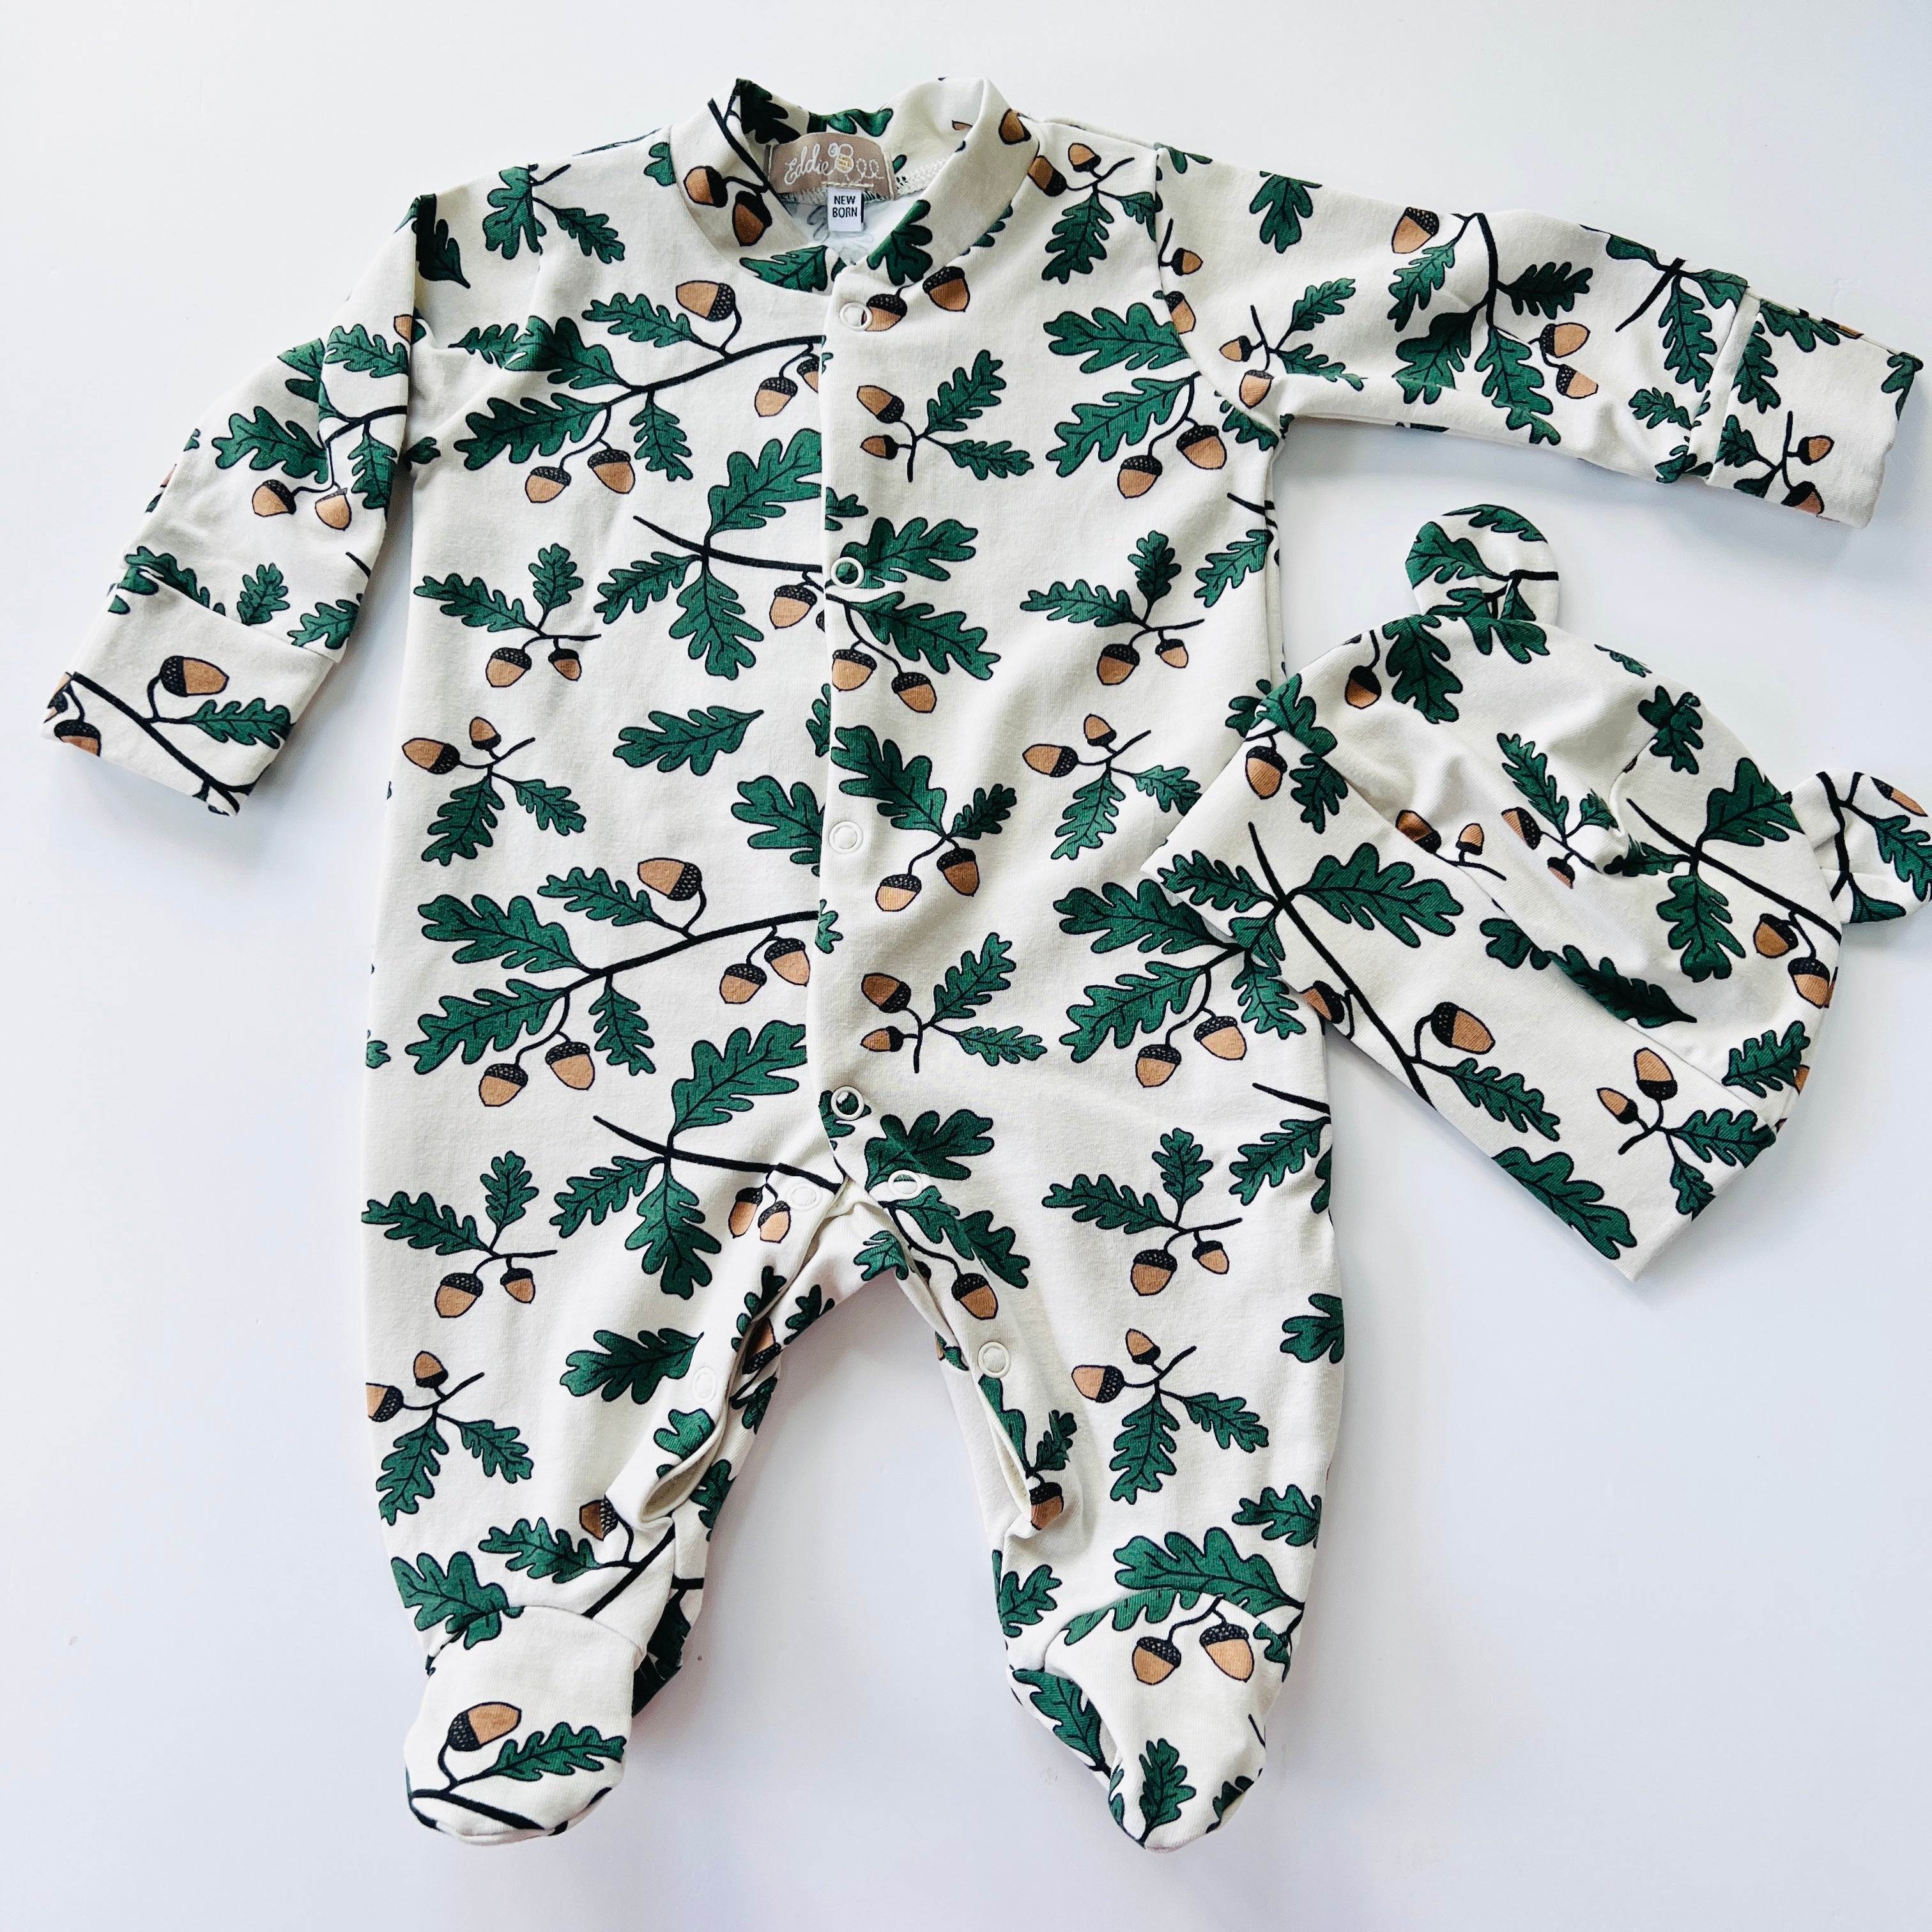 Eddie & Bee organic cotton Baby sleep suit  in Oat " Little acorn " print.